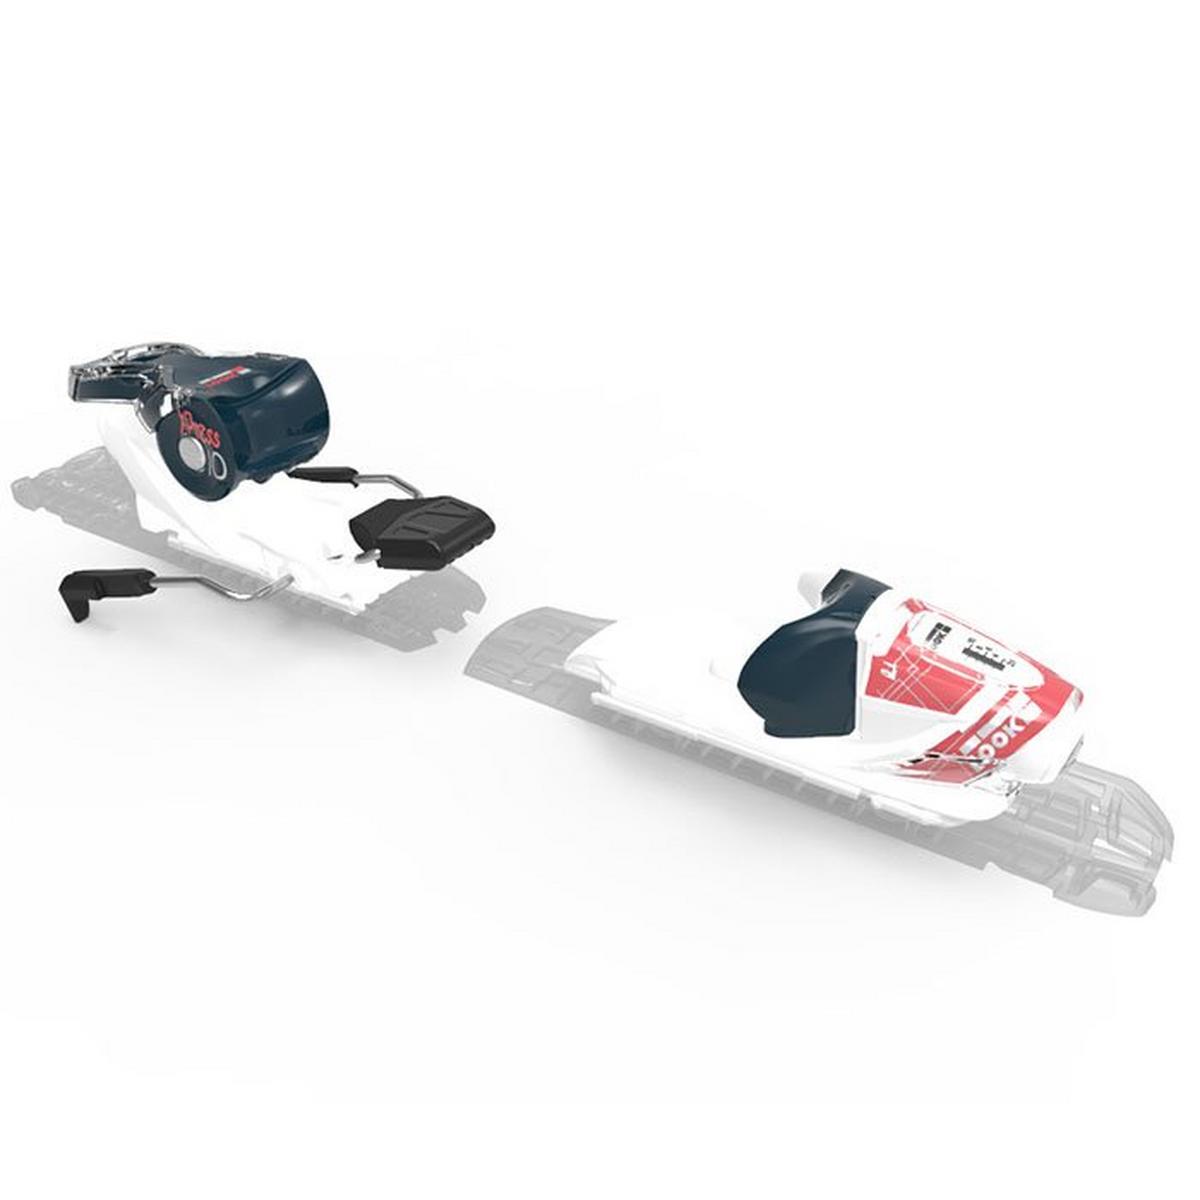 Xpress W 10 B83 Ski Binding [2020]